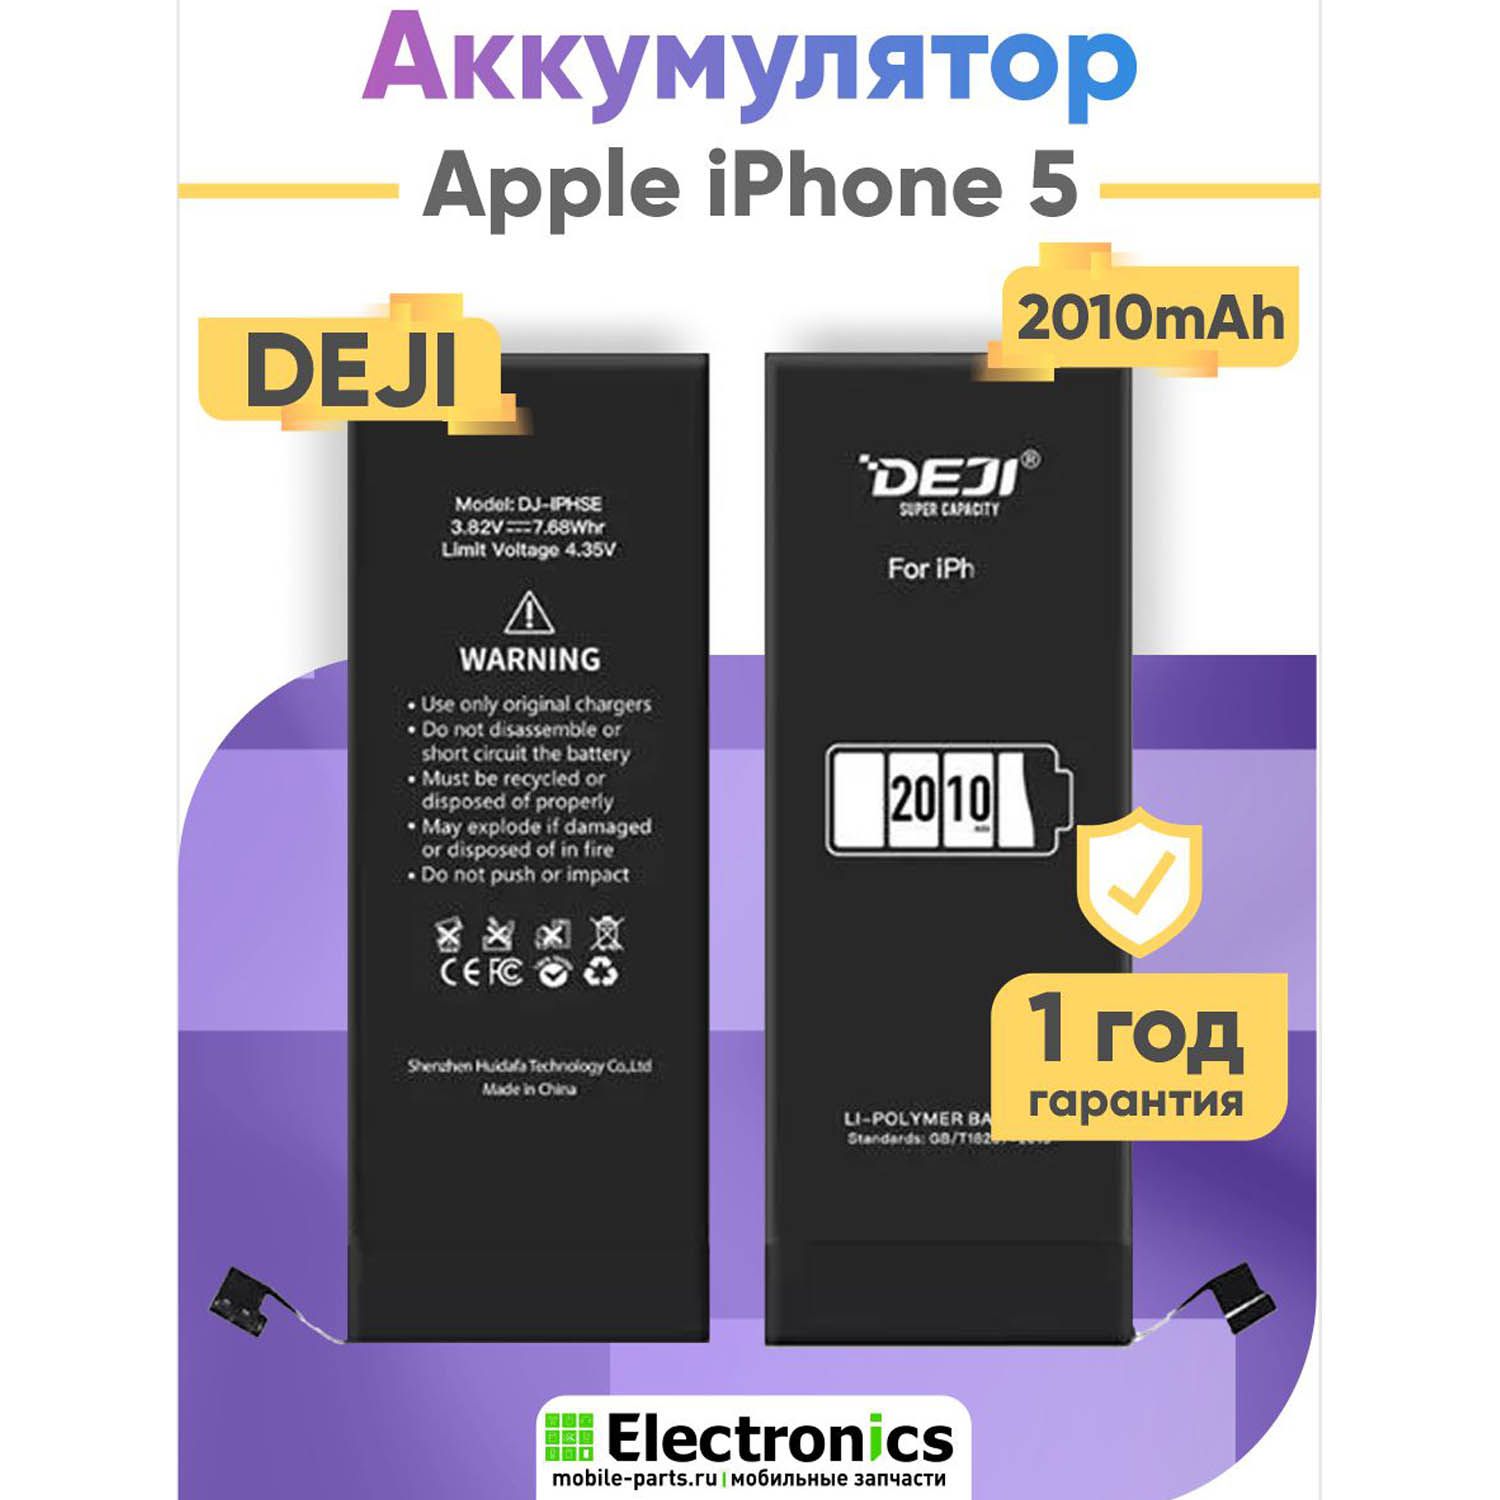 Аккумулятор DEJI Apple iPhone 5 повышенной ёмкости 2010mAh